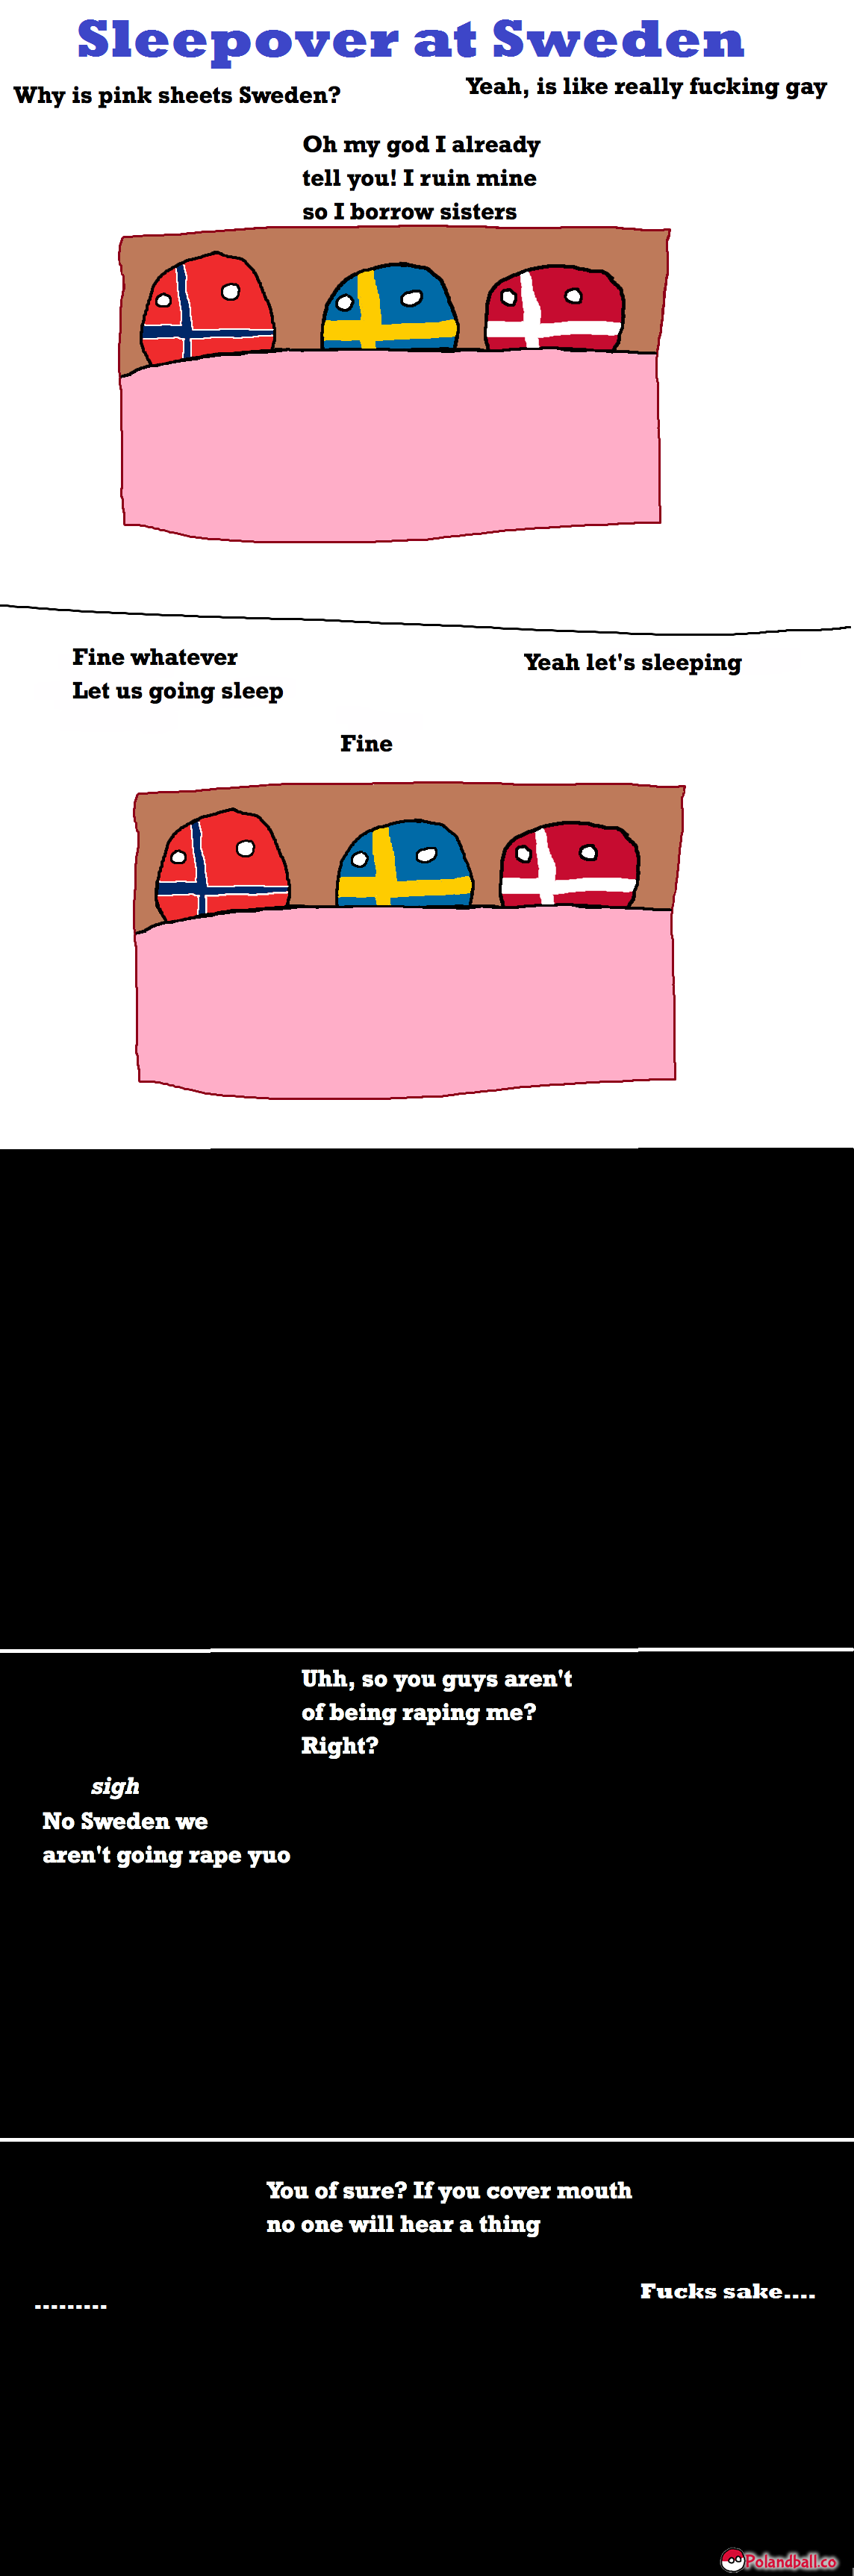 Sleepover at Sweden's